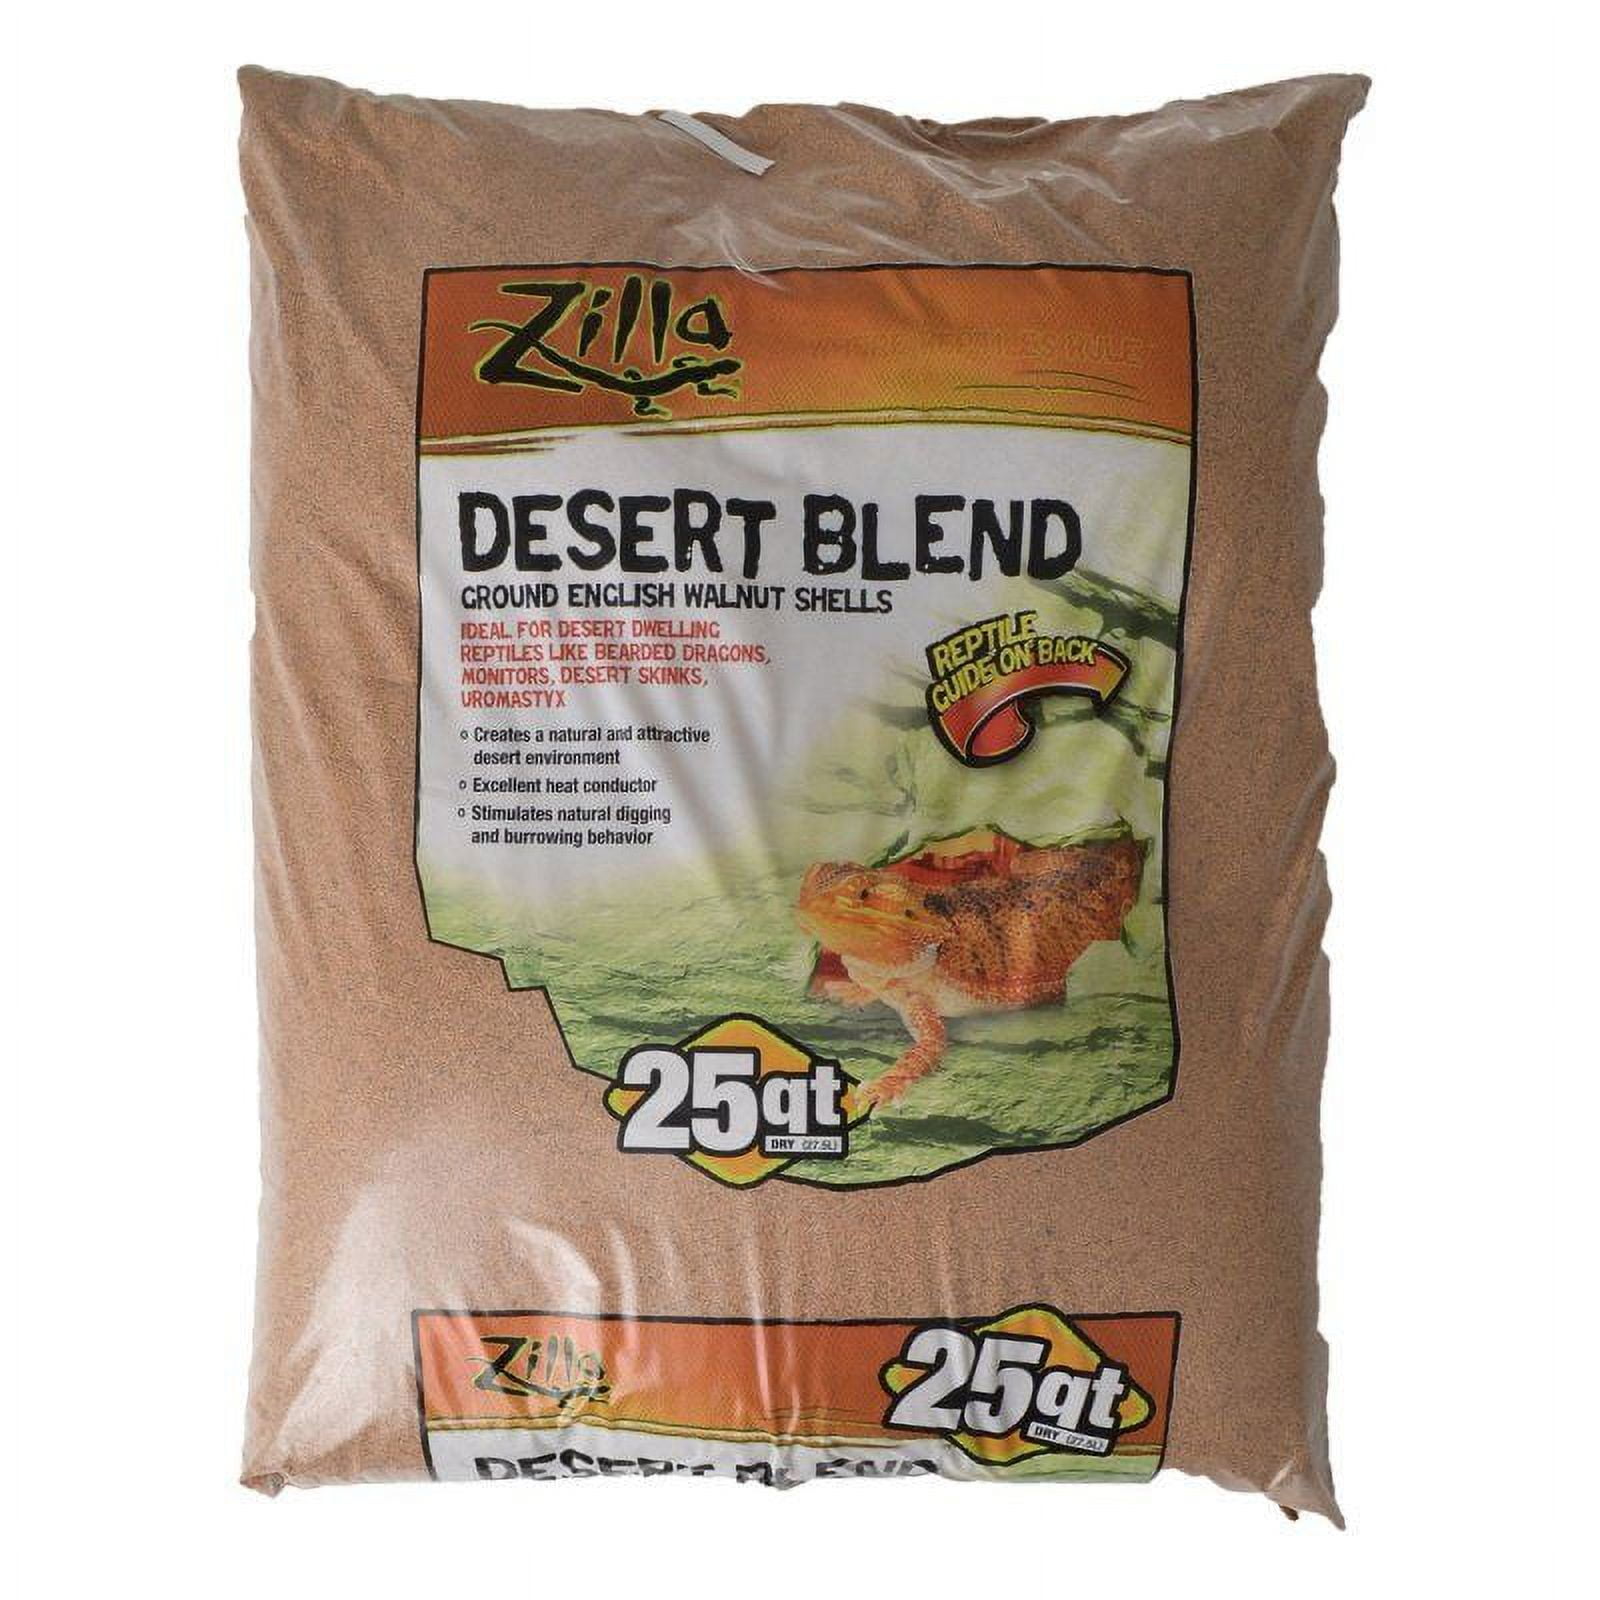 Zilla Dry Ground English Walnut Shell, Desert Sand Blend, 5-QT